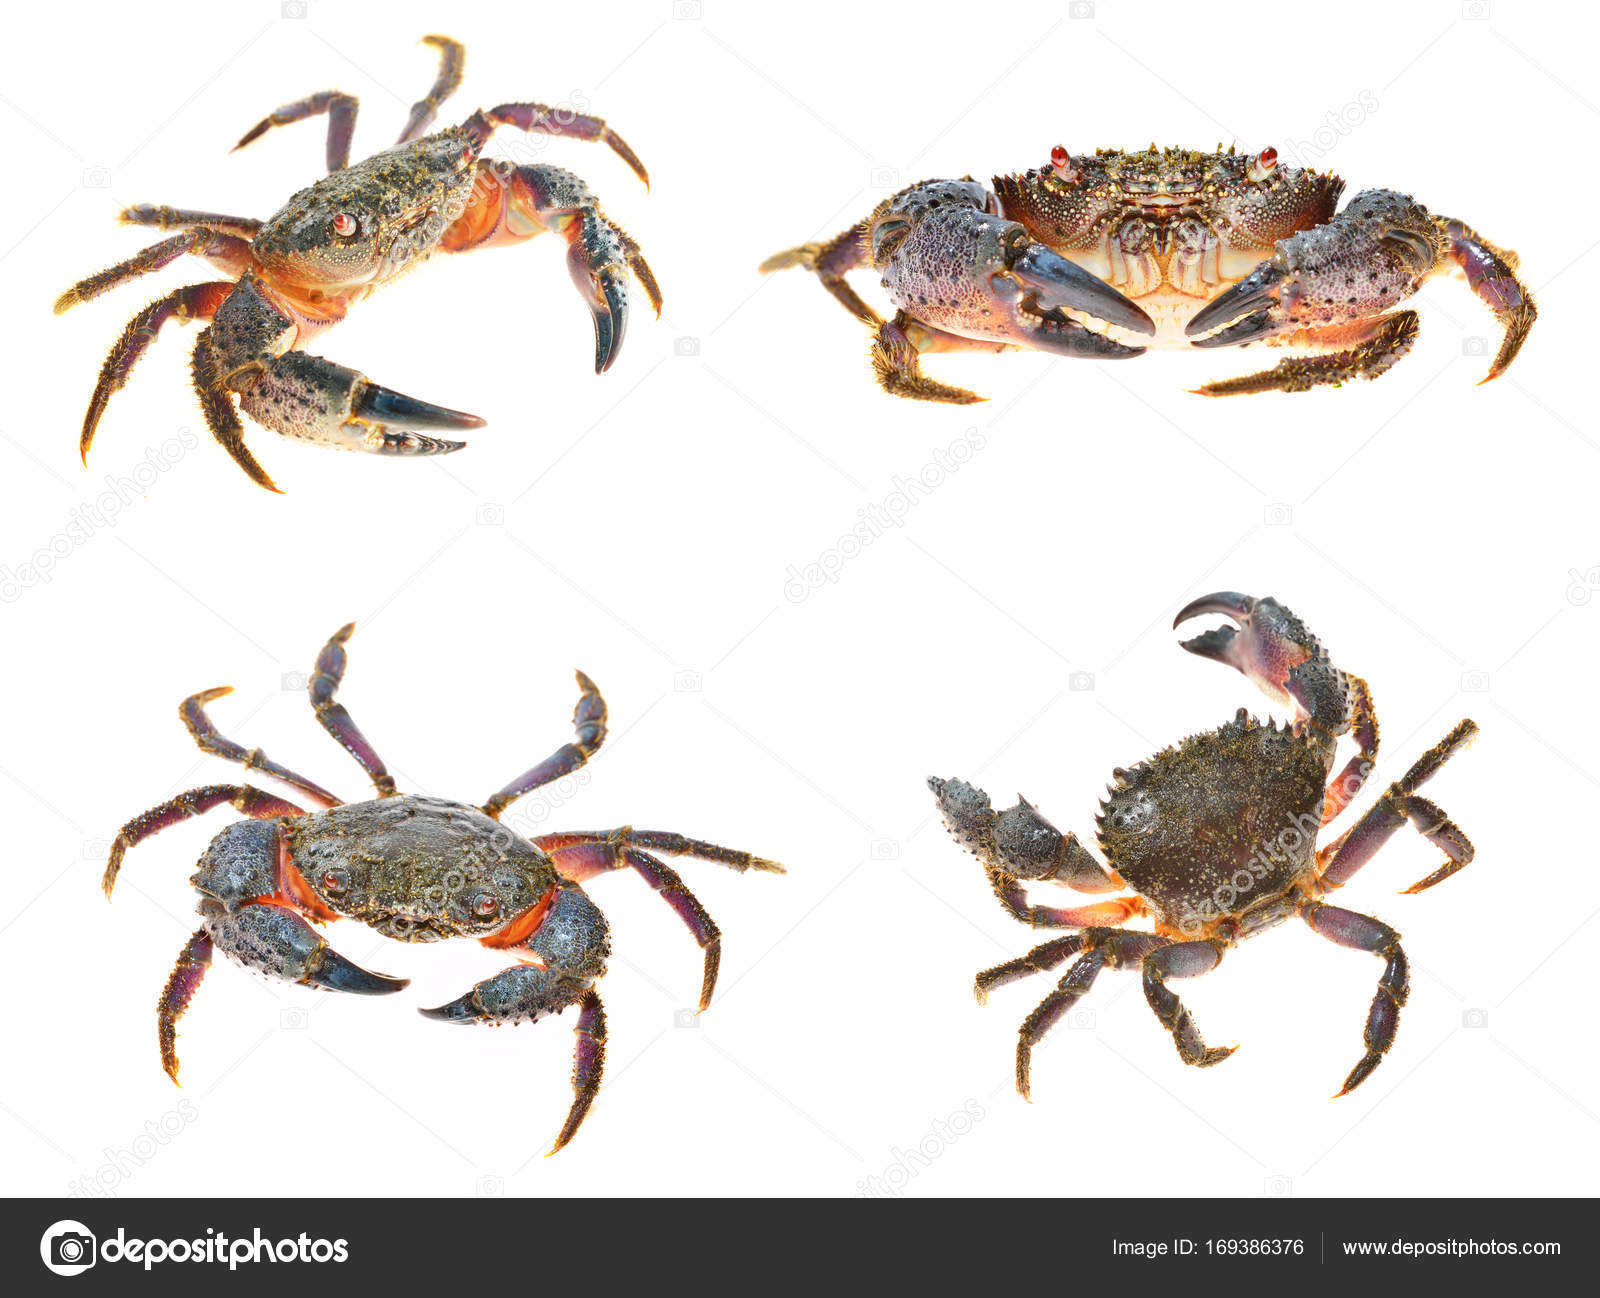 warty crab Eriphia verrucosa — Stock Photo © alex.stemmer #169386376